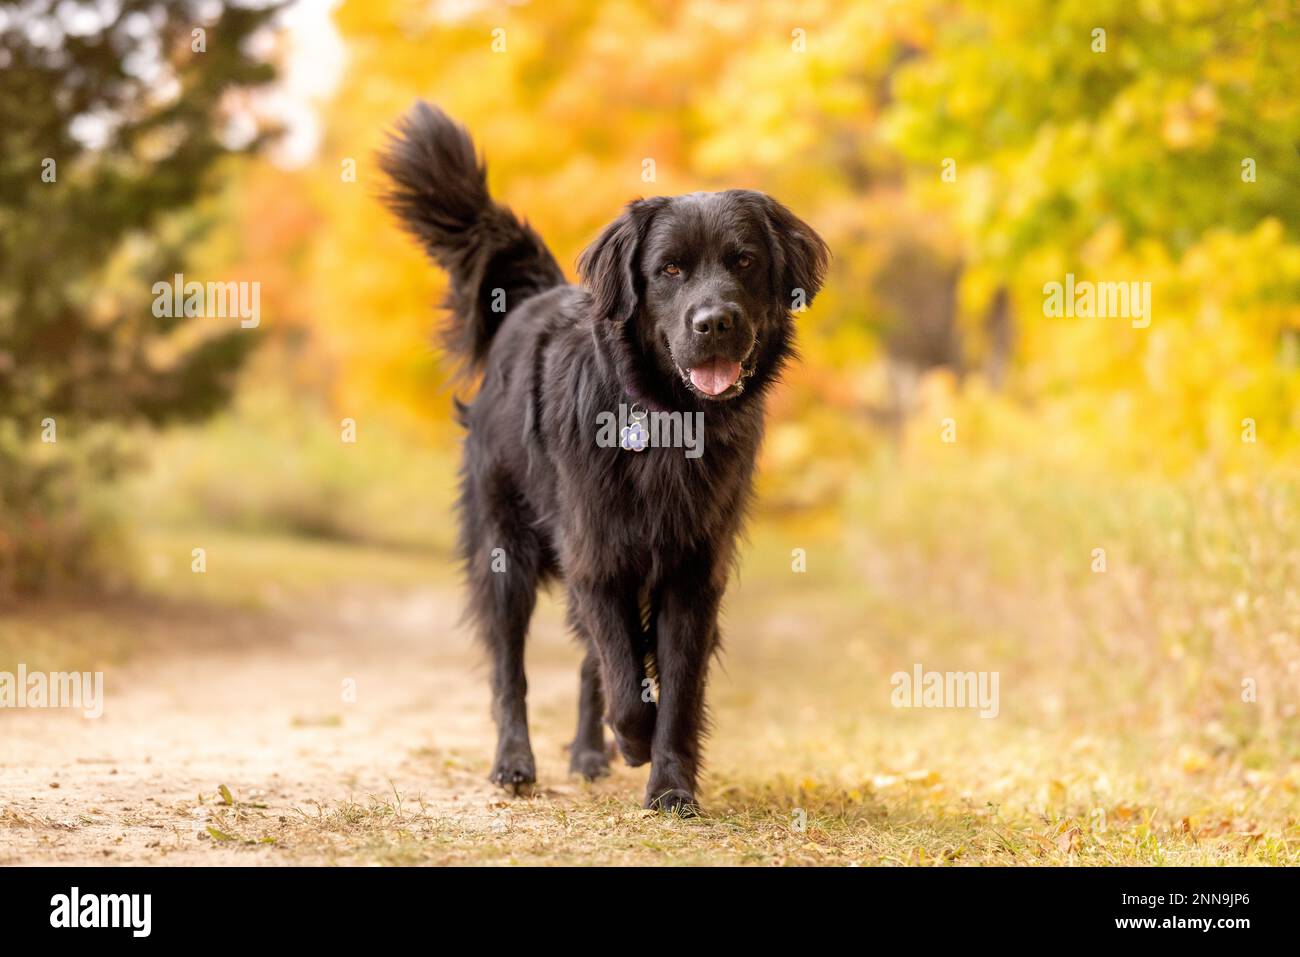 A black newfoundland dog walking through an autumn forest on a sunny day Stock Photo